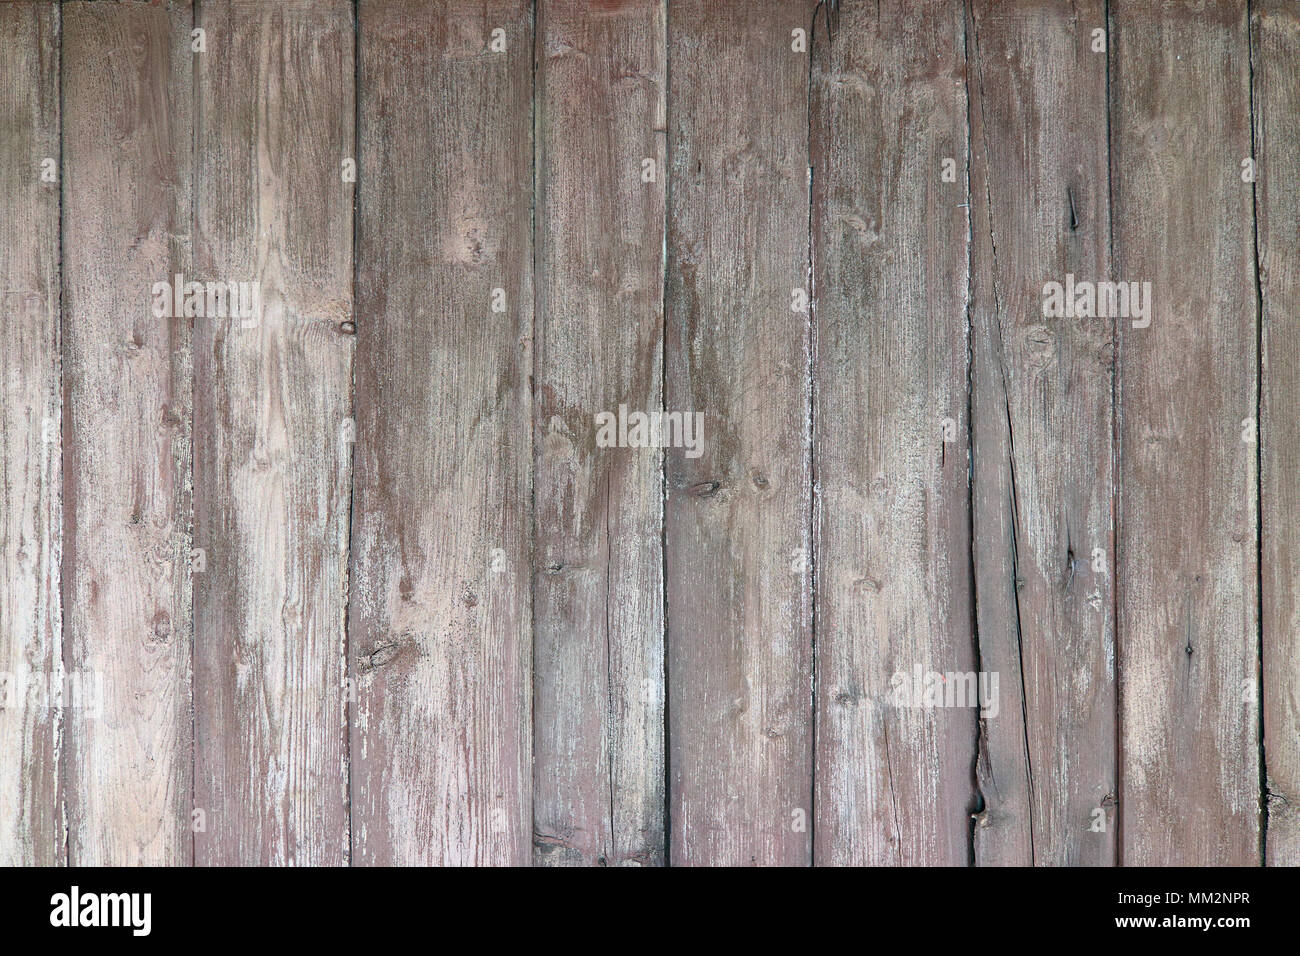 Alte schäbige Holzbohlen - Holz Textur Stockfoto